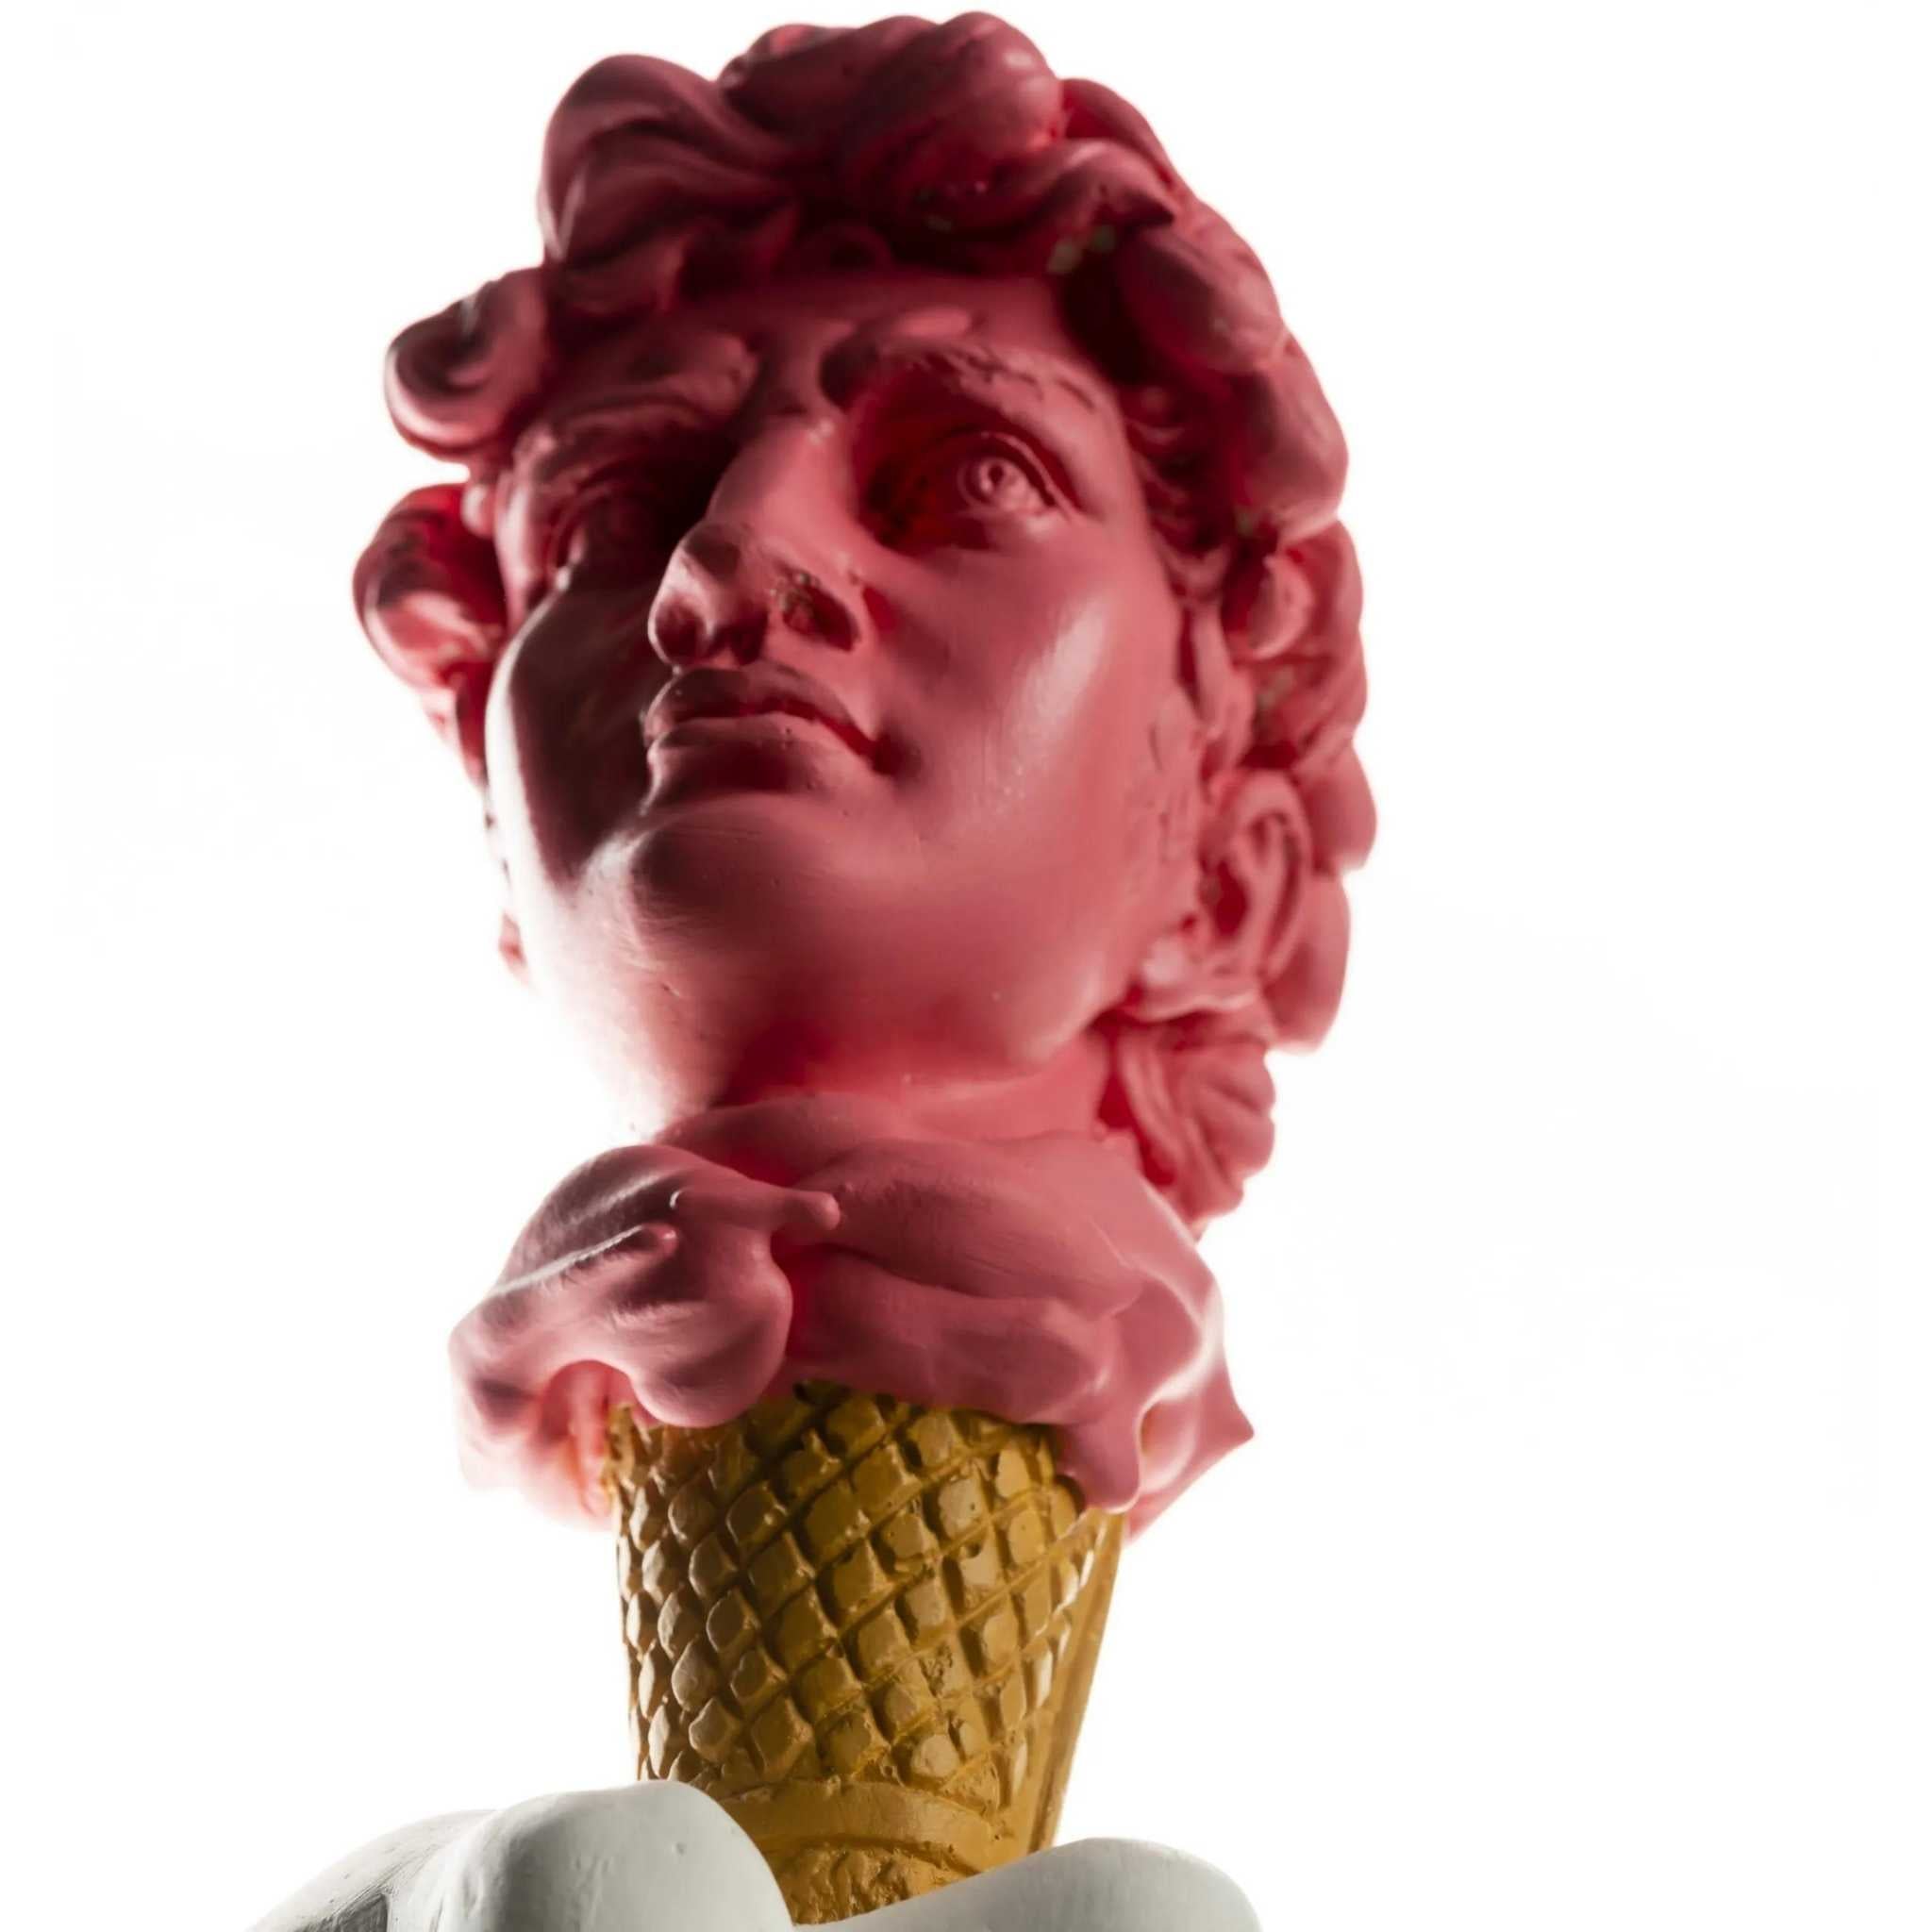 David on the Ice Cream